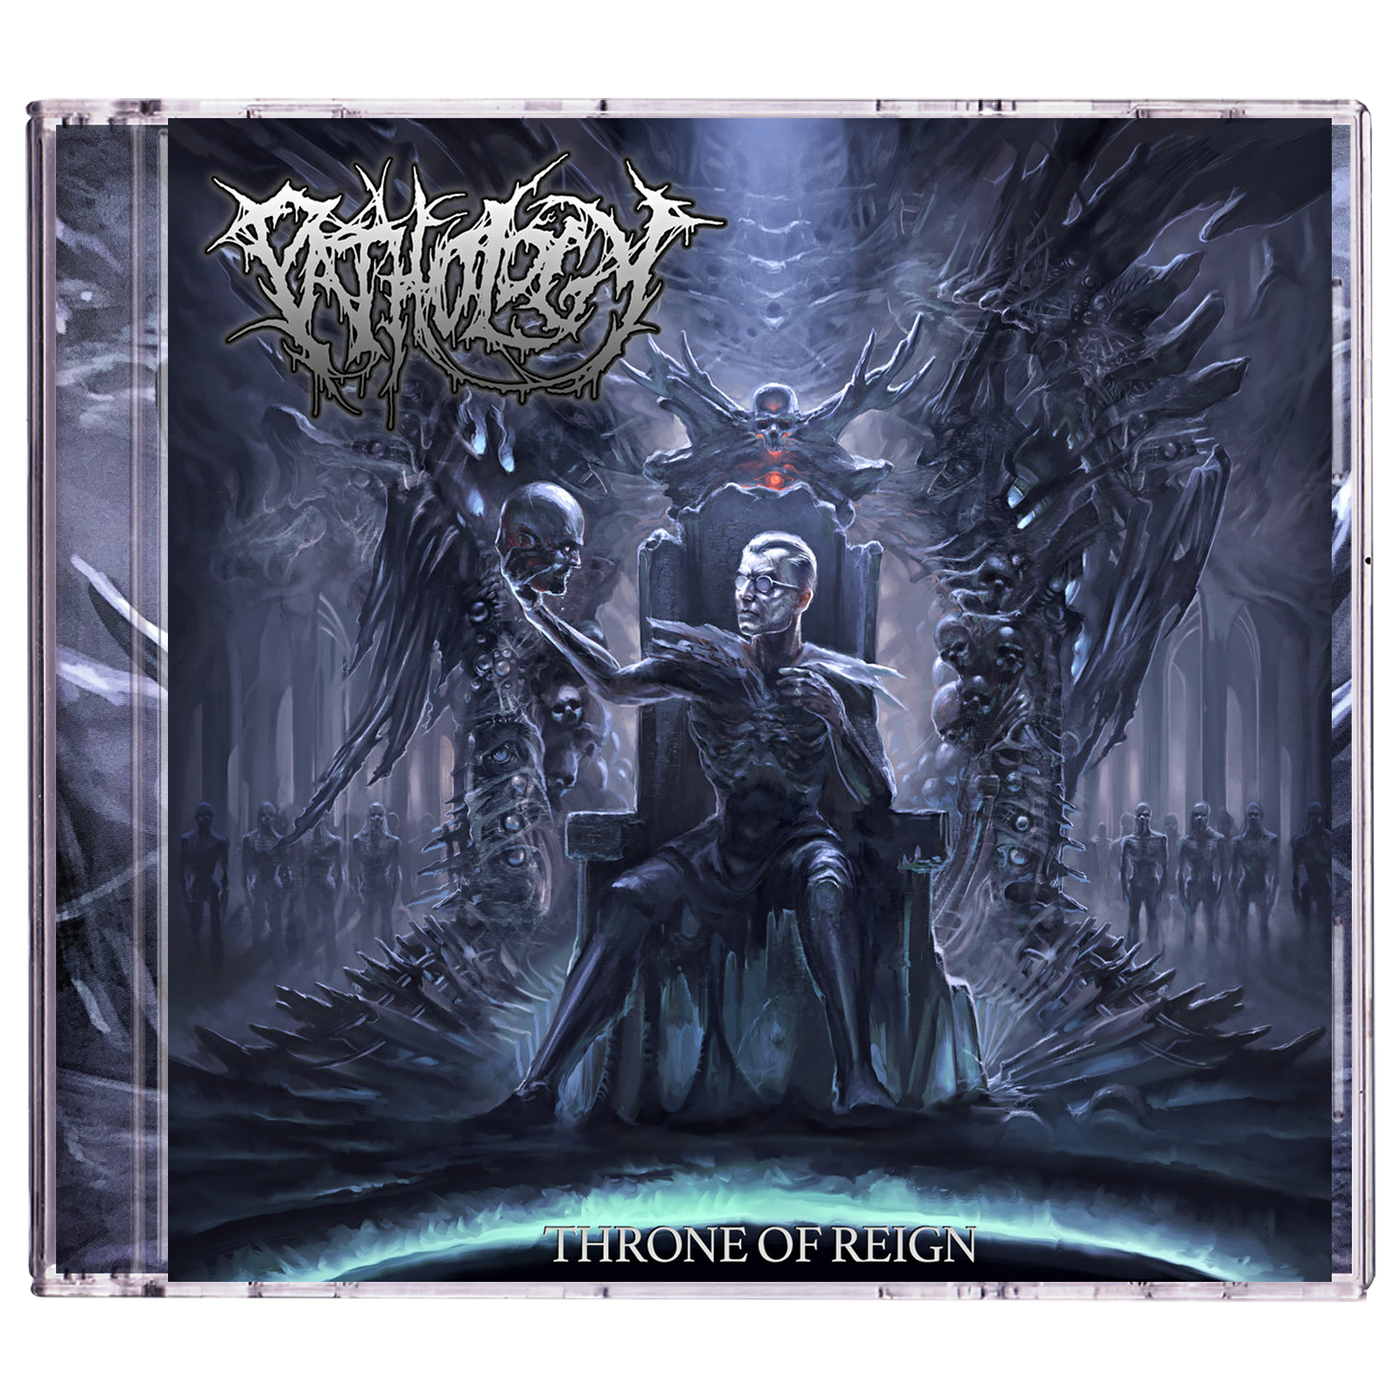 Pathology 'Throne of Reign' CD